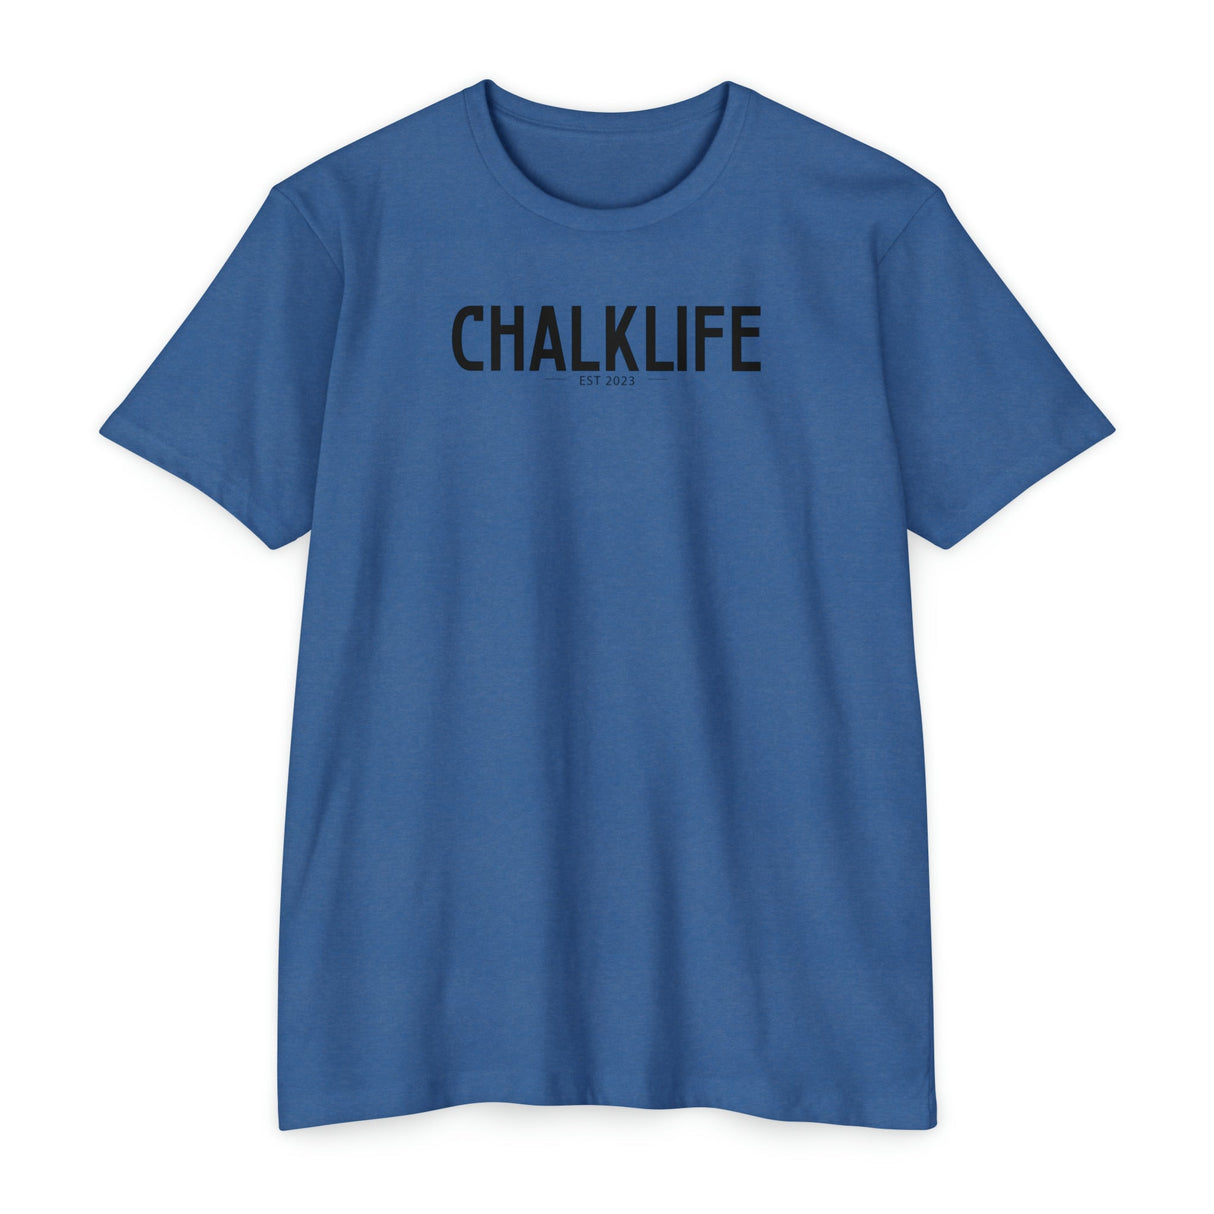 Chalklife "Women's Gymnastics Events" Spine T-Shirt (Regular) - Chalklife, LLC